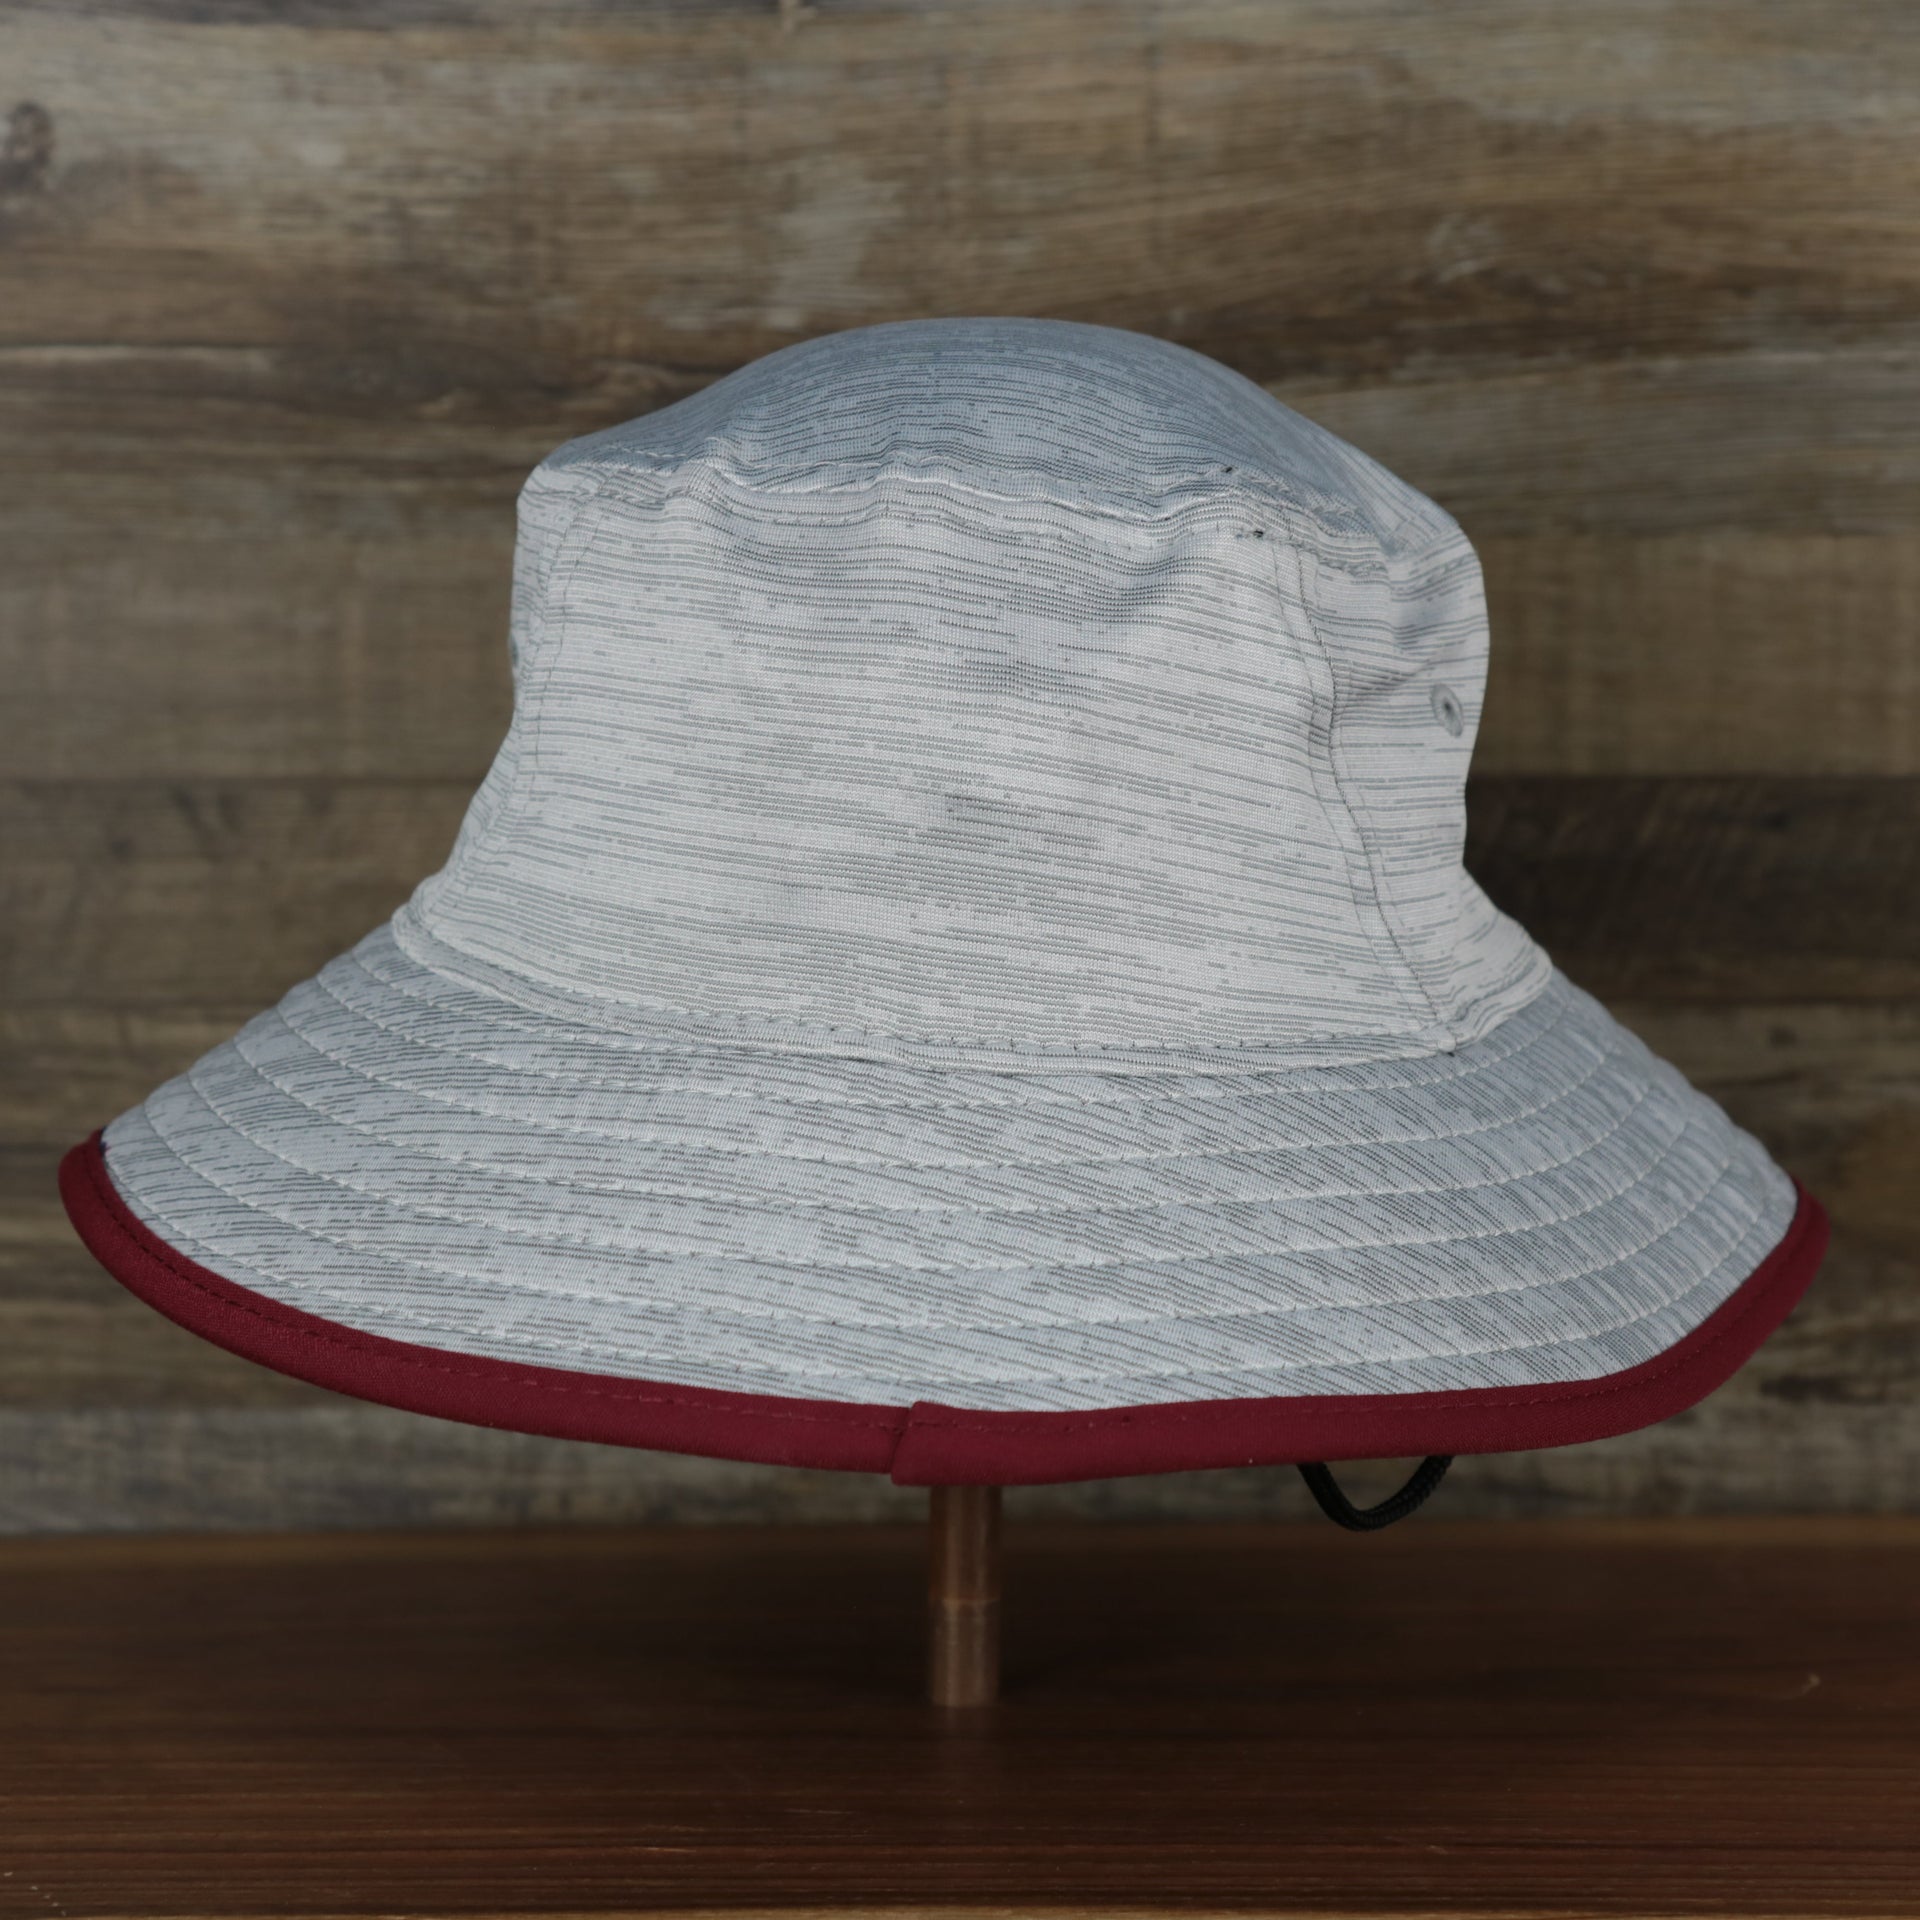 The backside of the Philadelphia Phillies Cooperstown New Era Bucket Hat